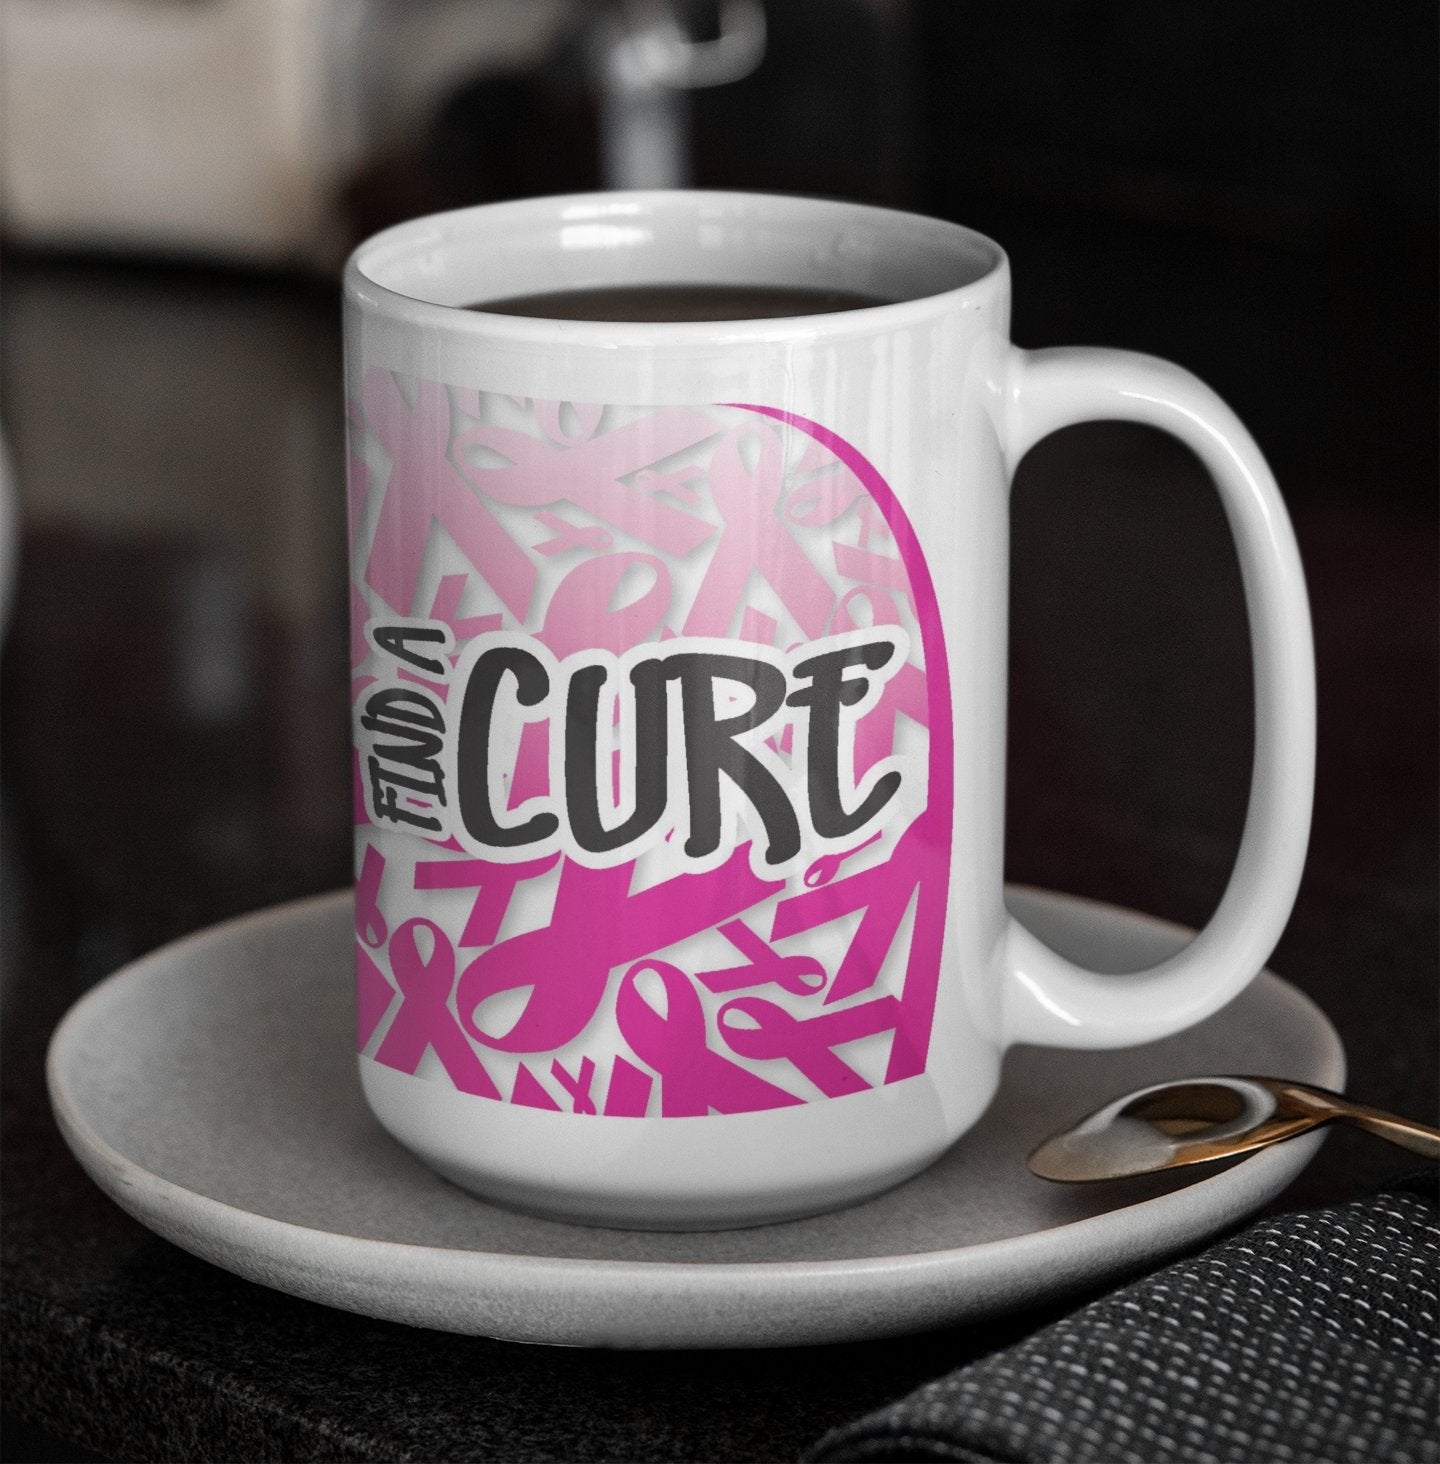 Find a Cure Breast Cancer Coffee Mug